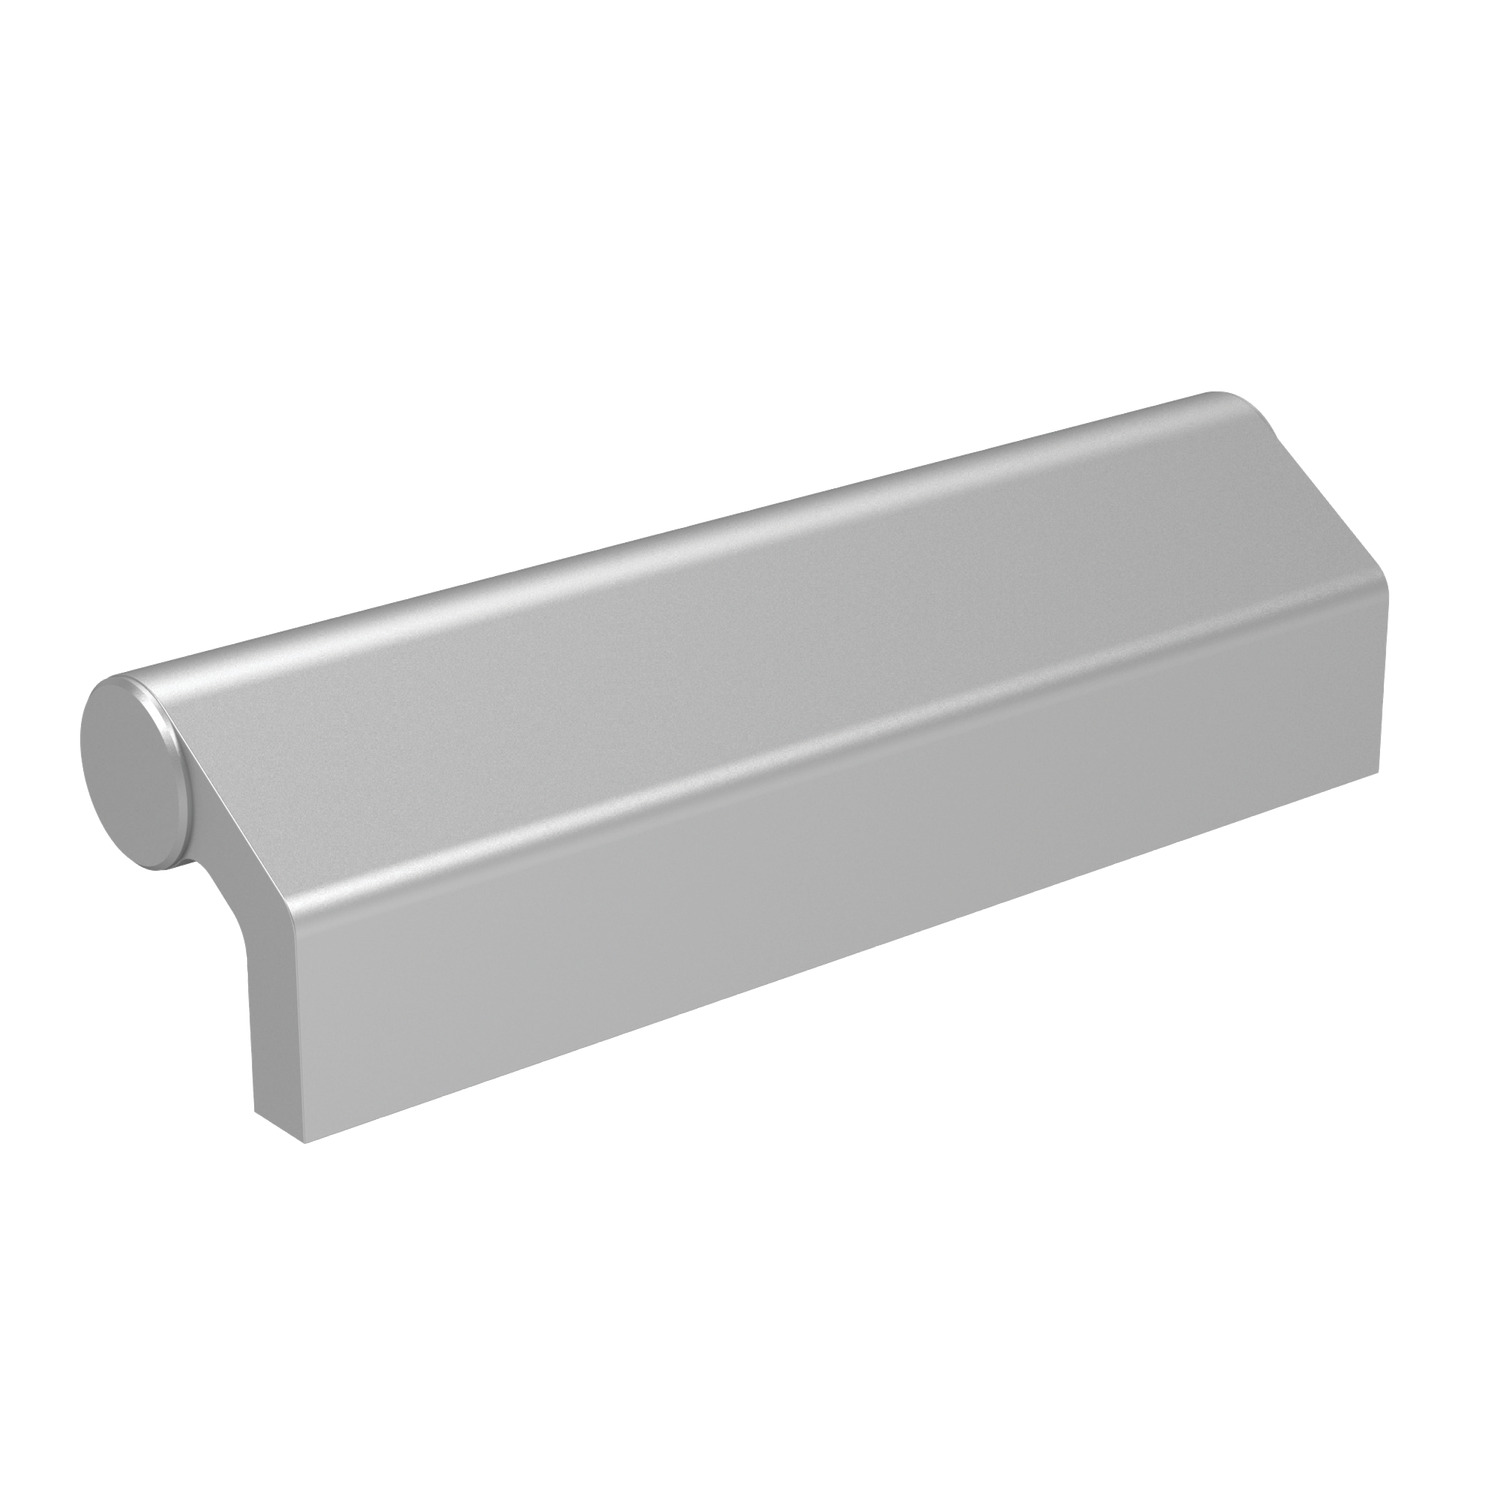 79650.W0460-1 Ledge Pulls - Aluminium Natural - 460 - 500